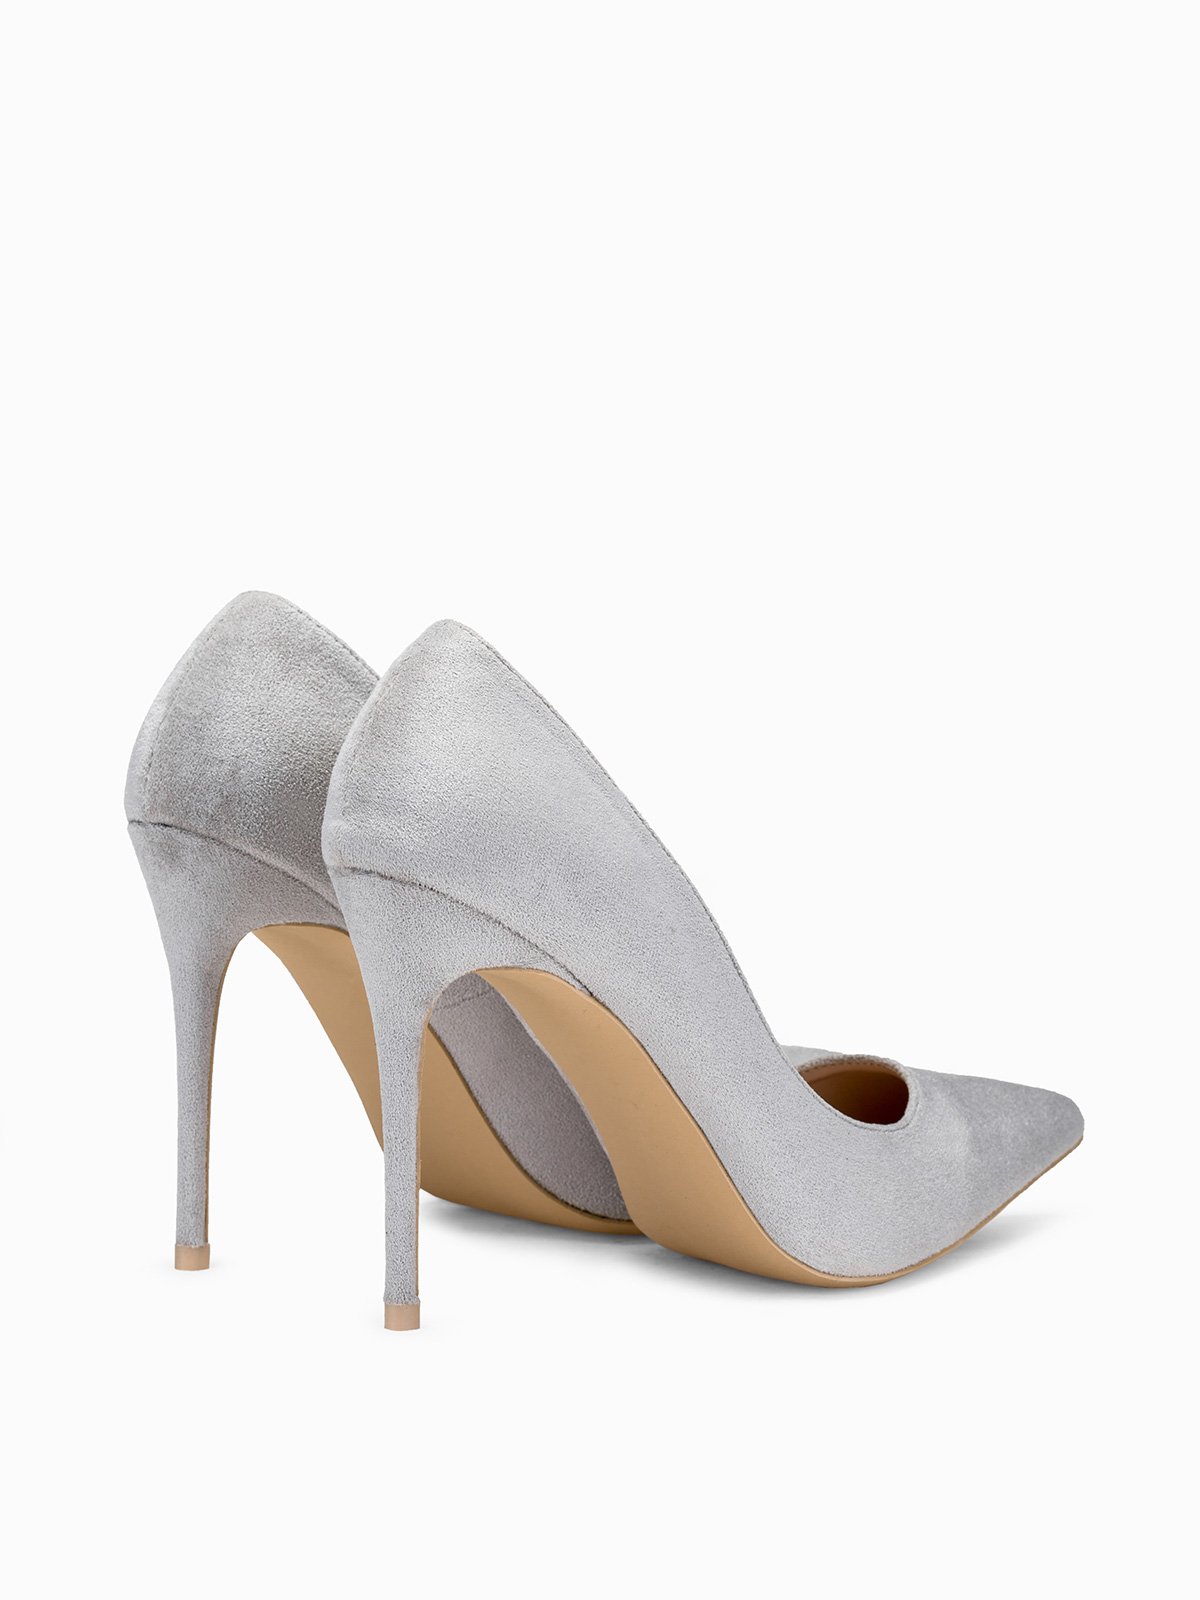 Women’s suede heels LR345 grey | MODONE wholesale - Clothing For Men